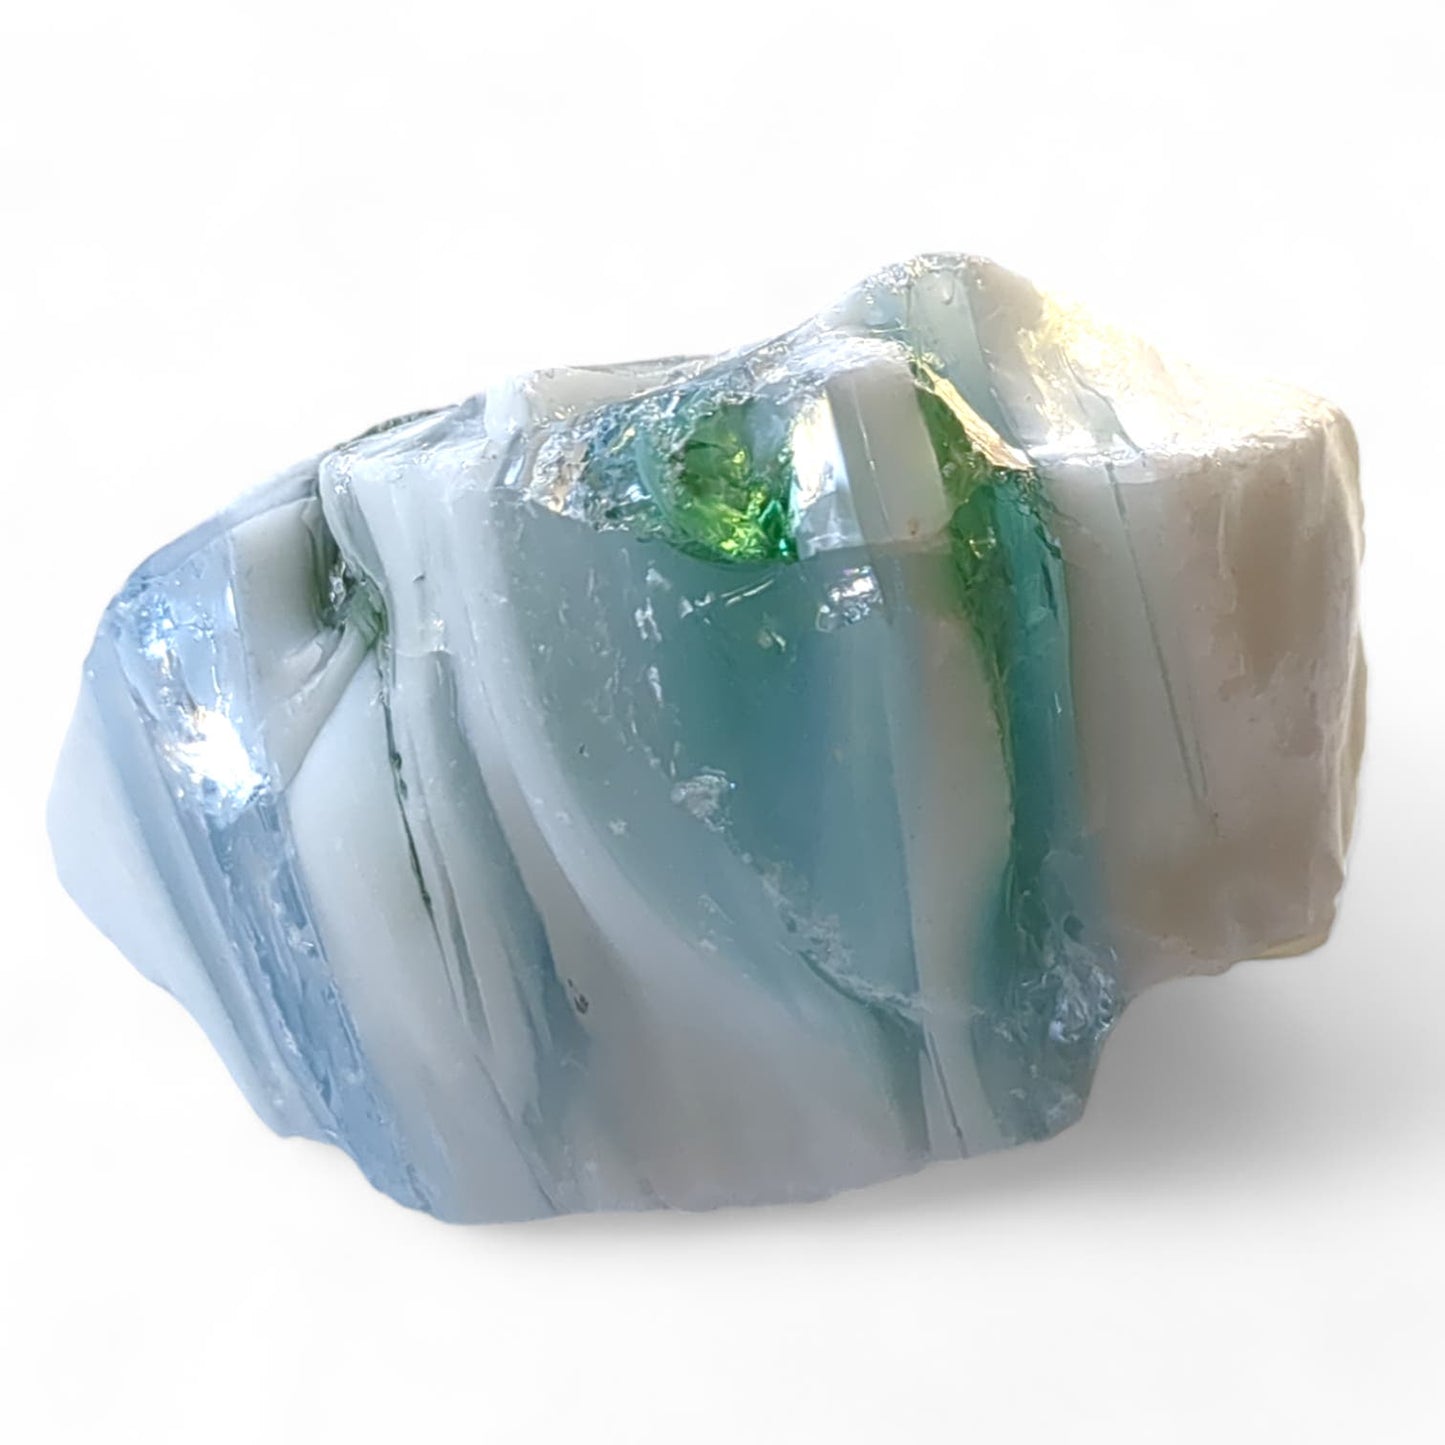 Blue Milk Glass Layered Art Glass Cullet Glowing Opaque Uranium Slag #4GX98